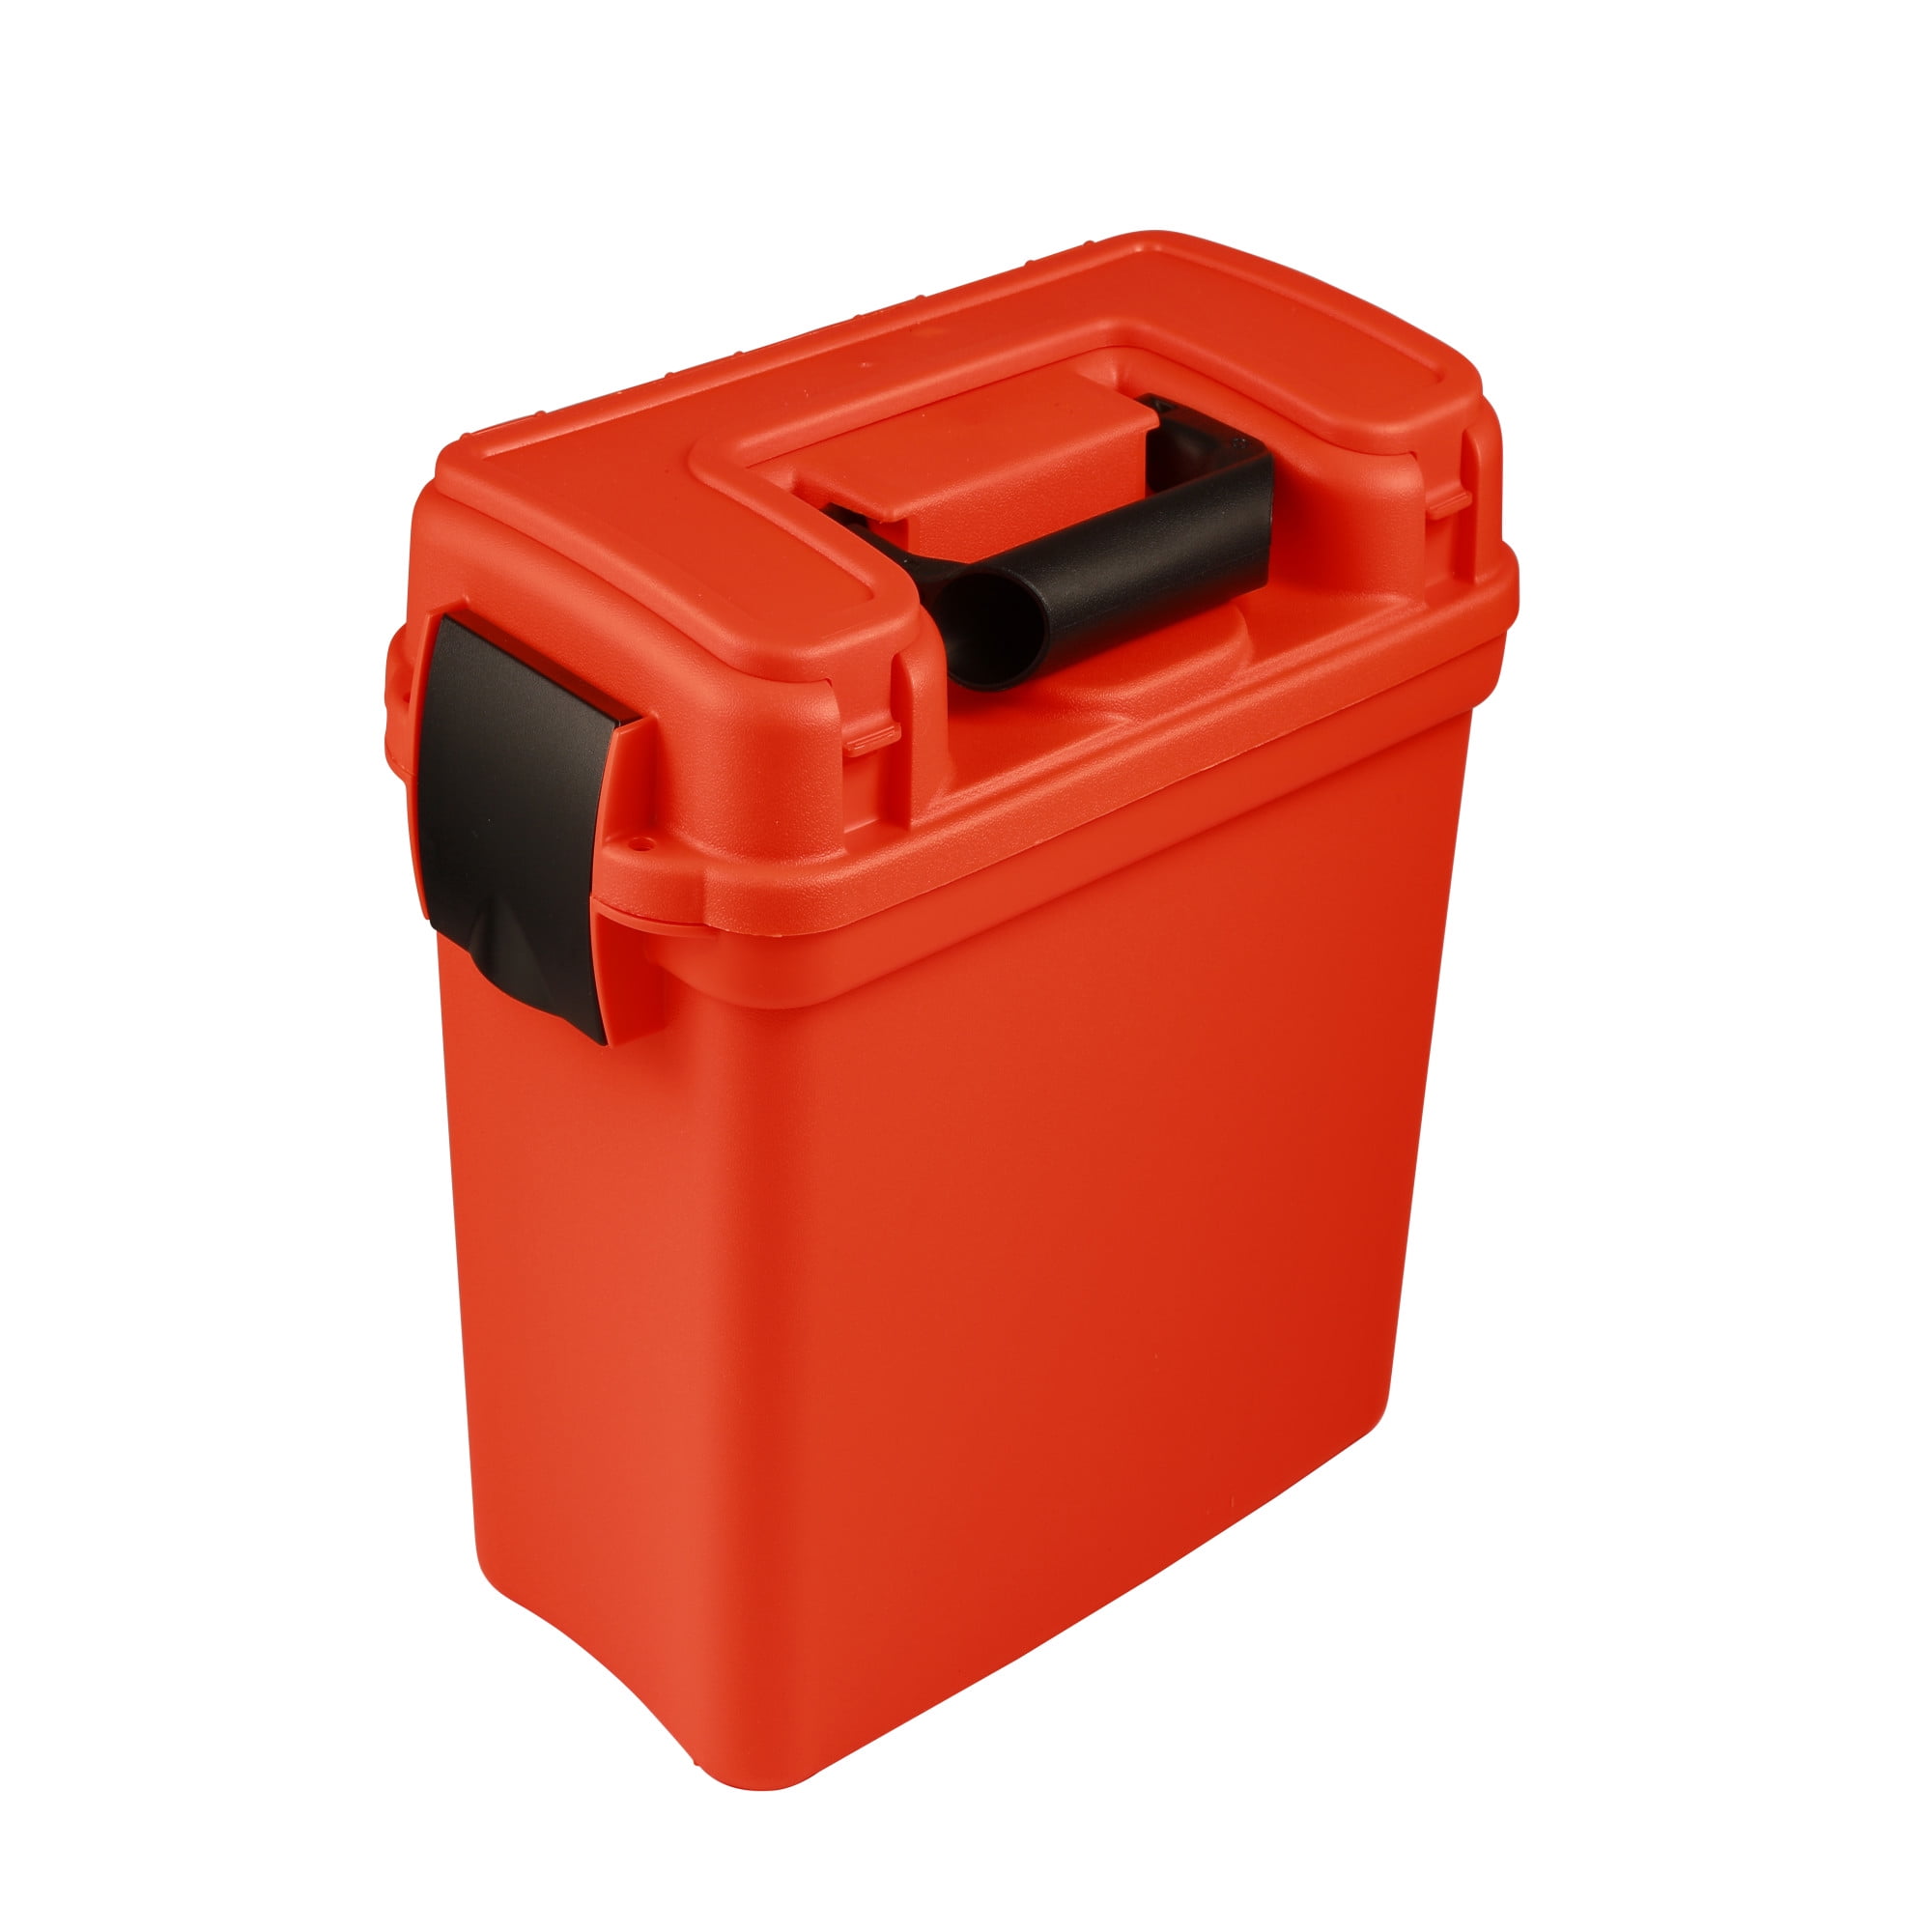 Outdoor Waterproof Container Plastic Dry Storage Box Case Organizer Holder 